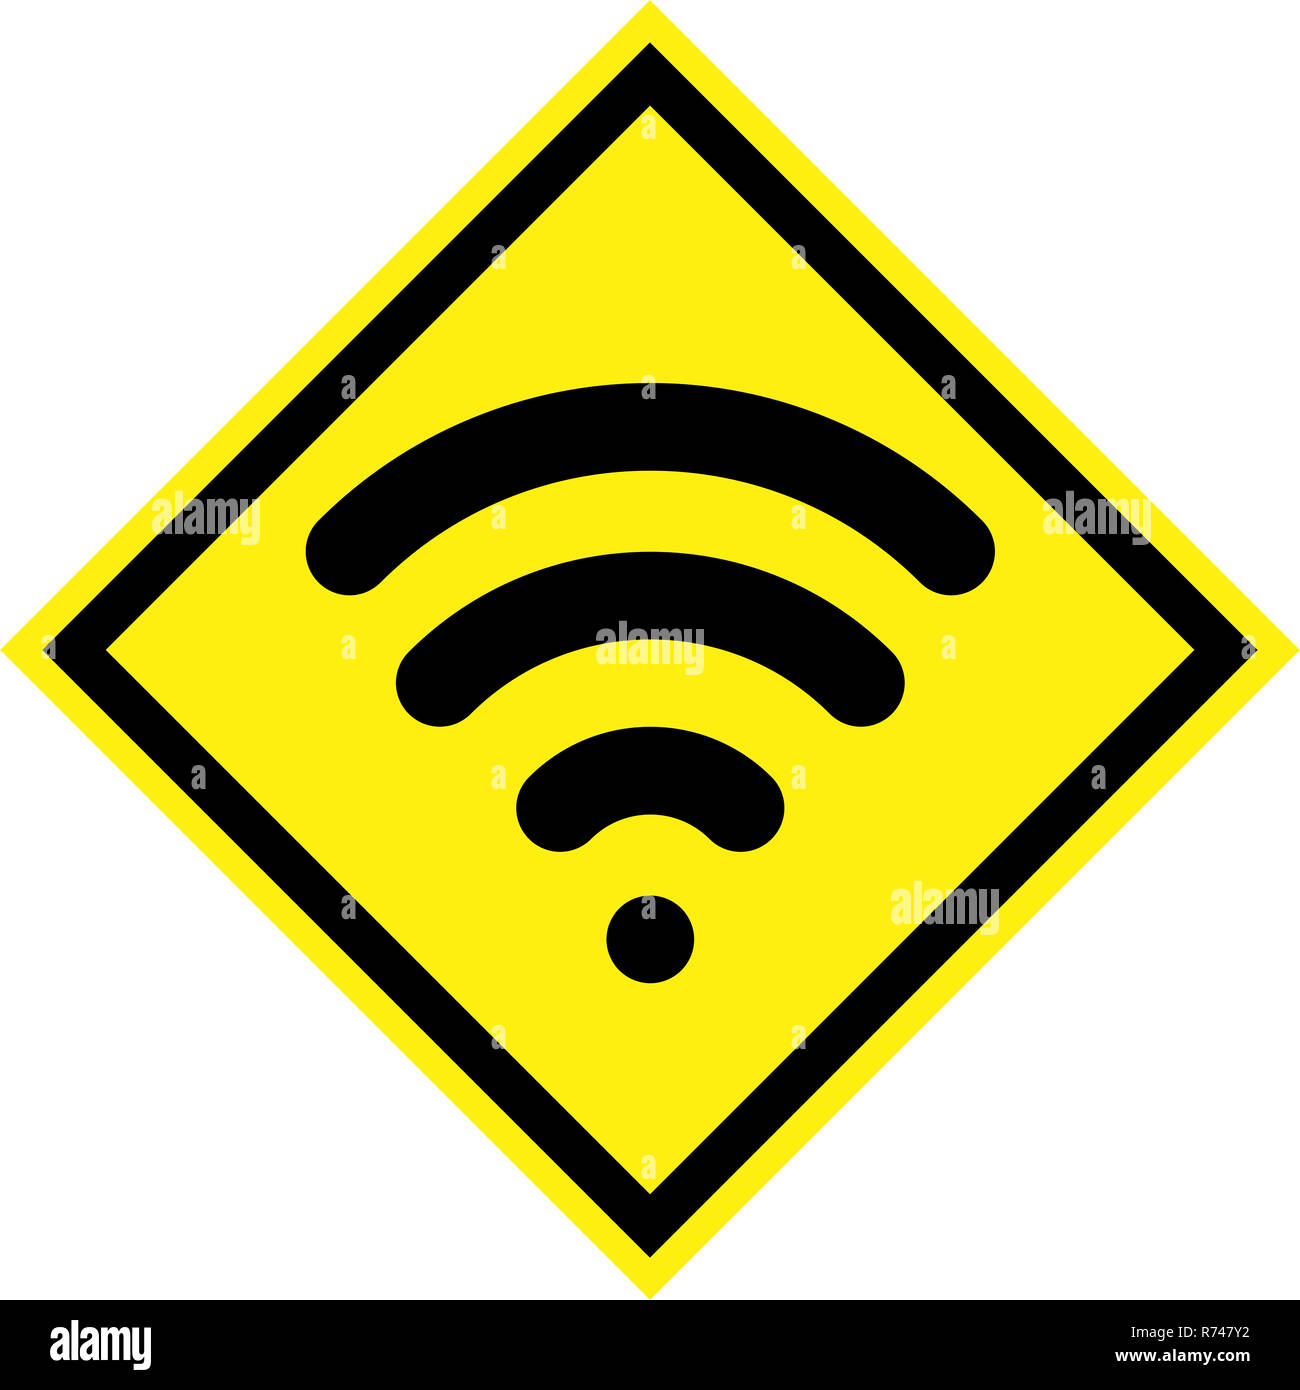 Yellow hazard sign with wireless symbol Stock Photo